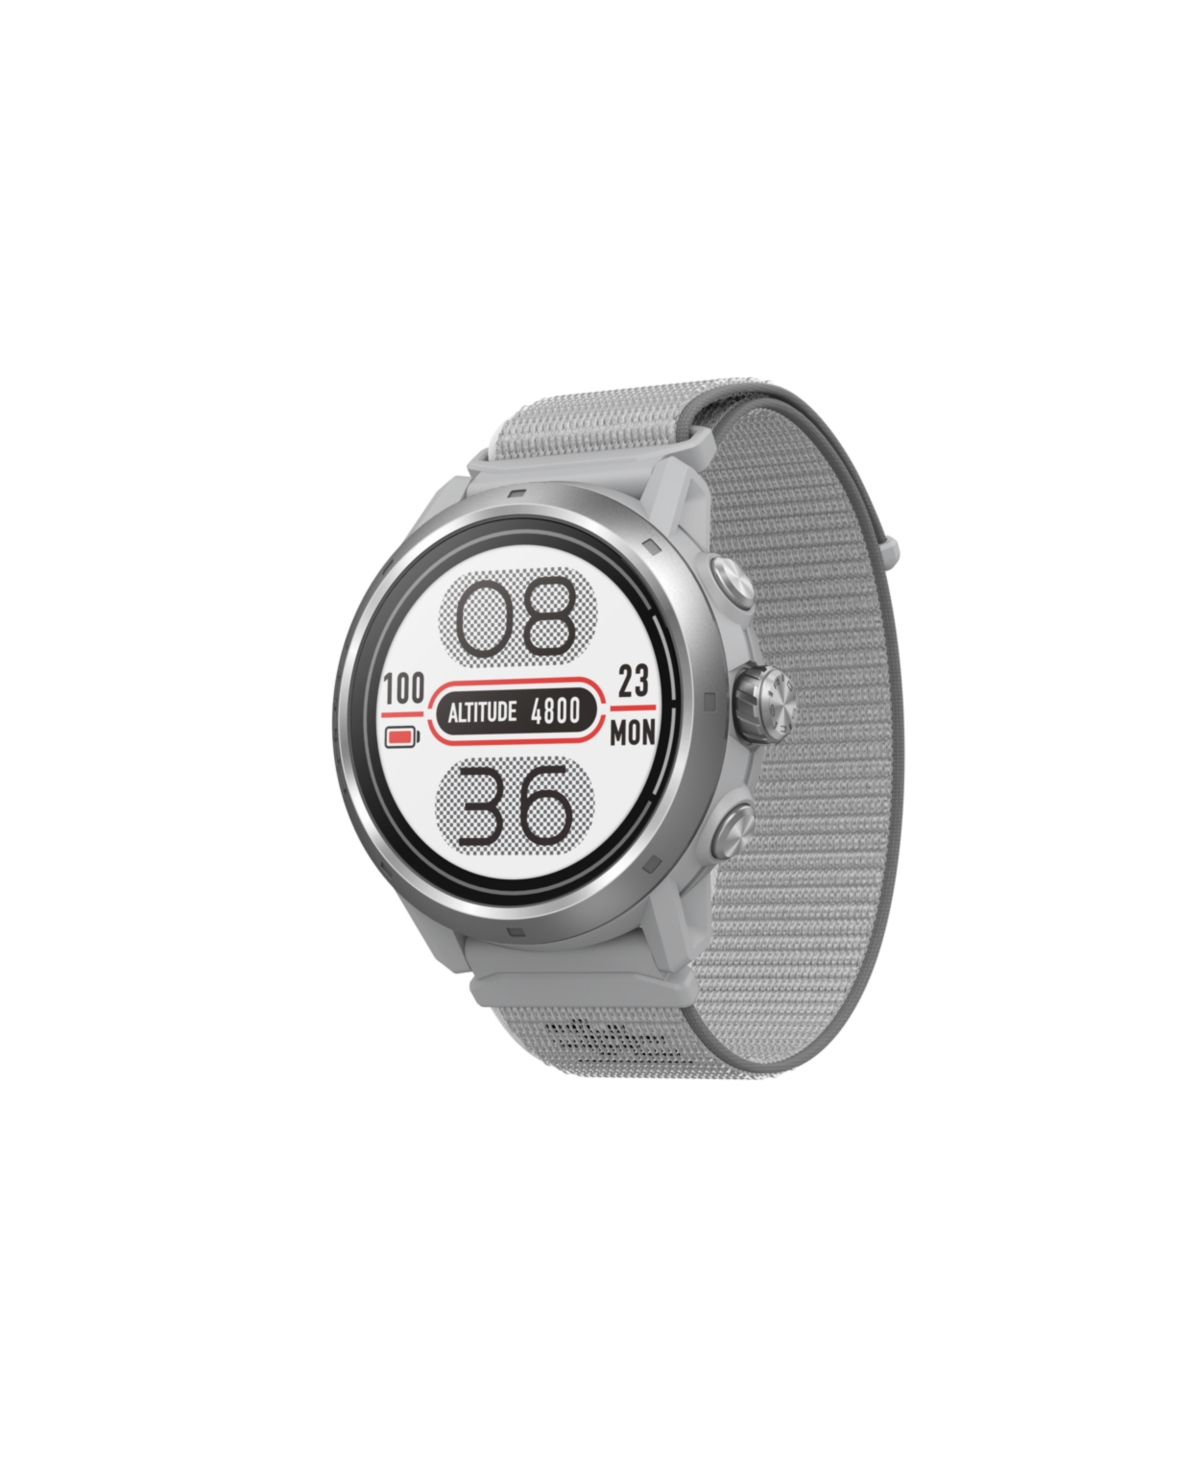 Apex 2 Pro Gps Outdoor Watch Grey w/ Nylon Band - Gray